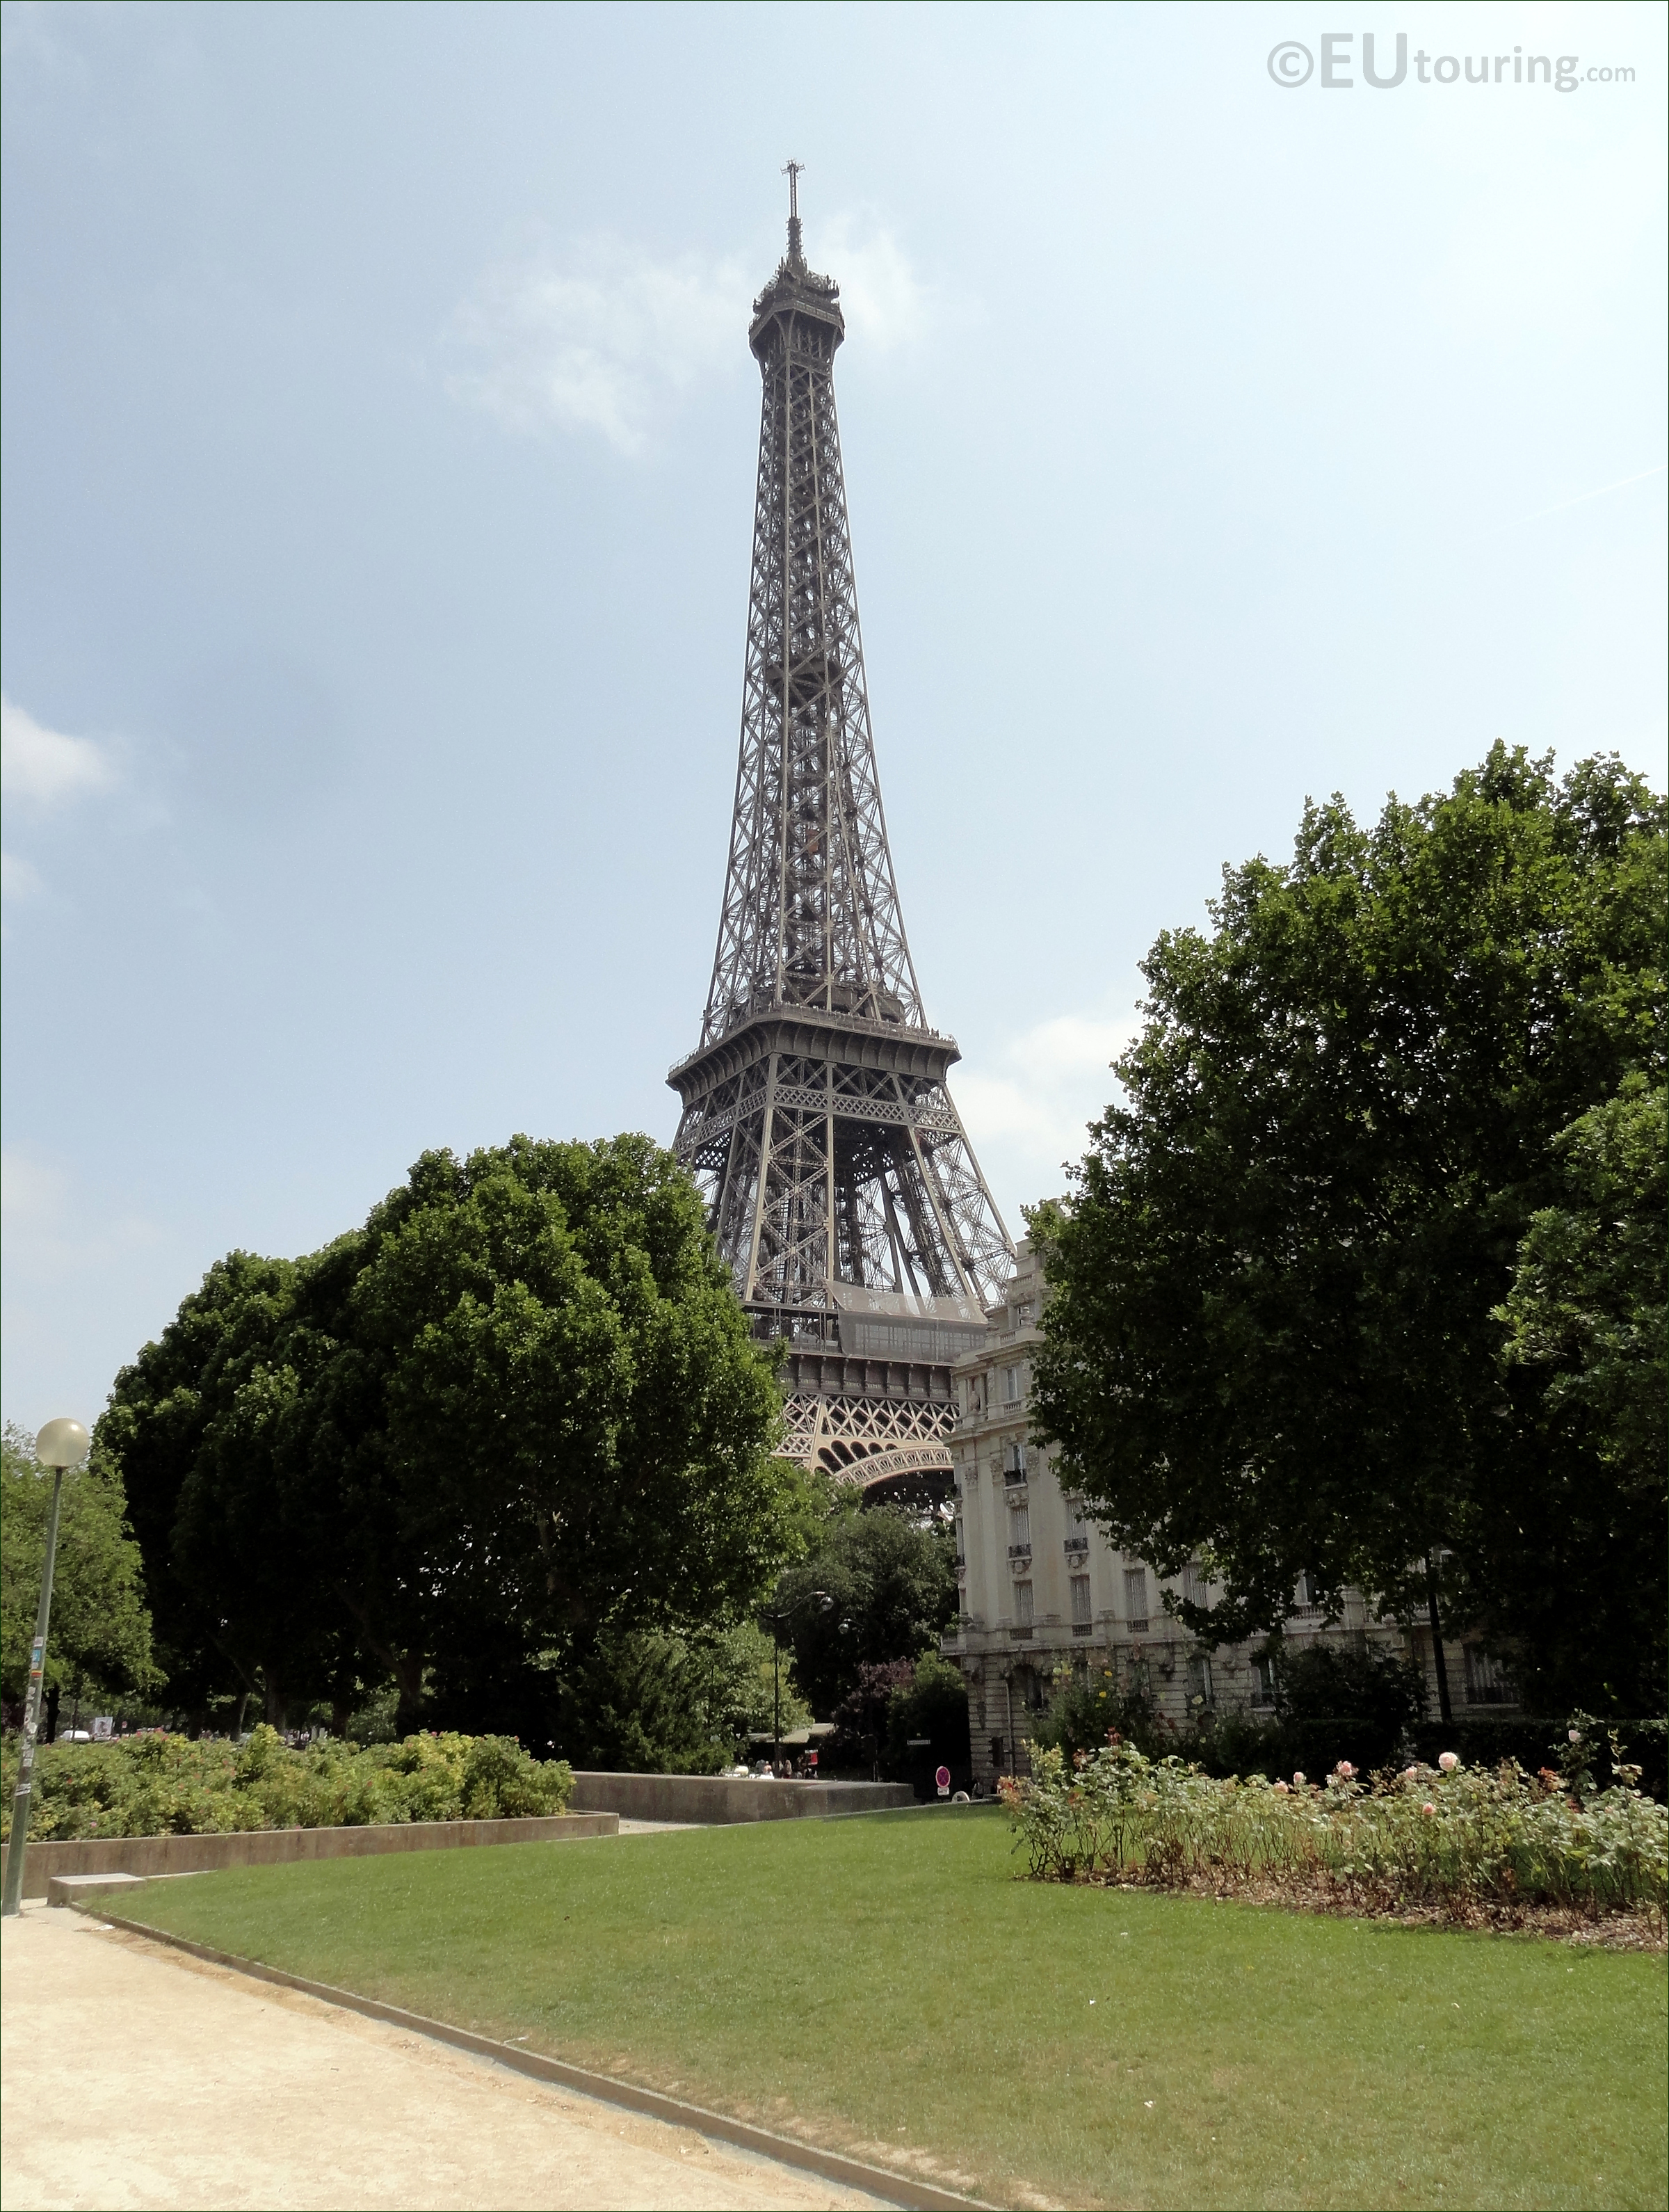 Promenade d'Australie and the Eiffel Tower